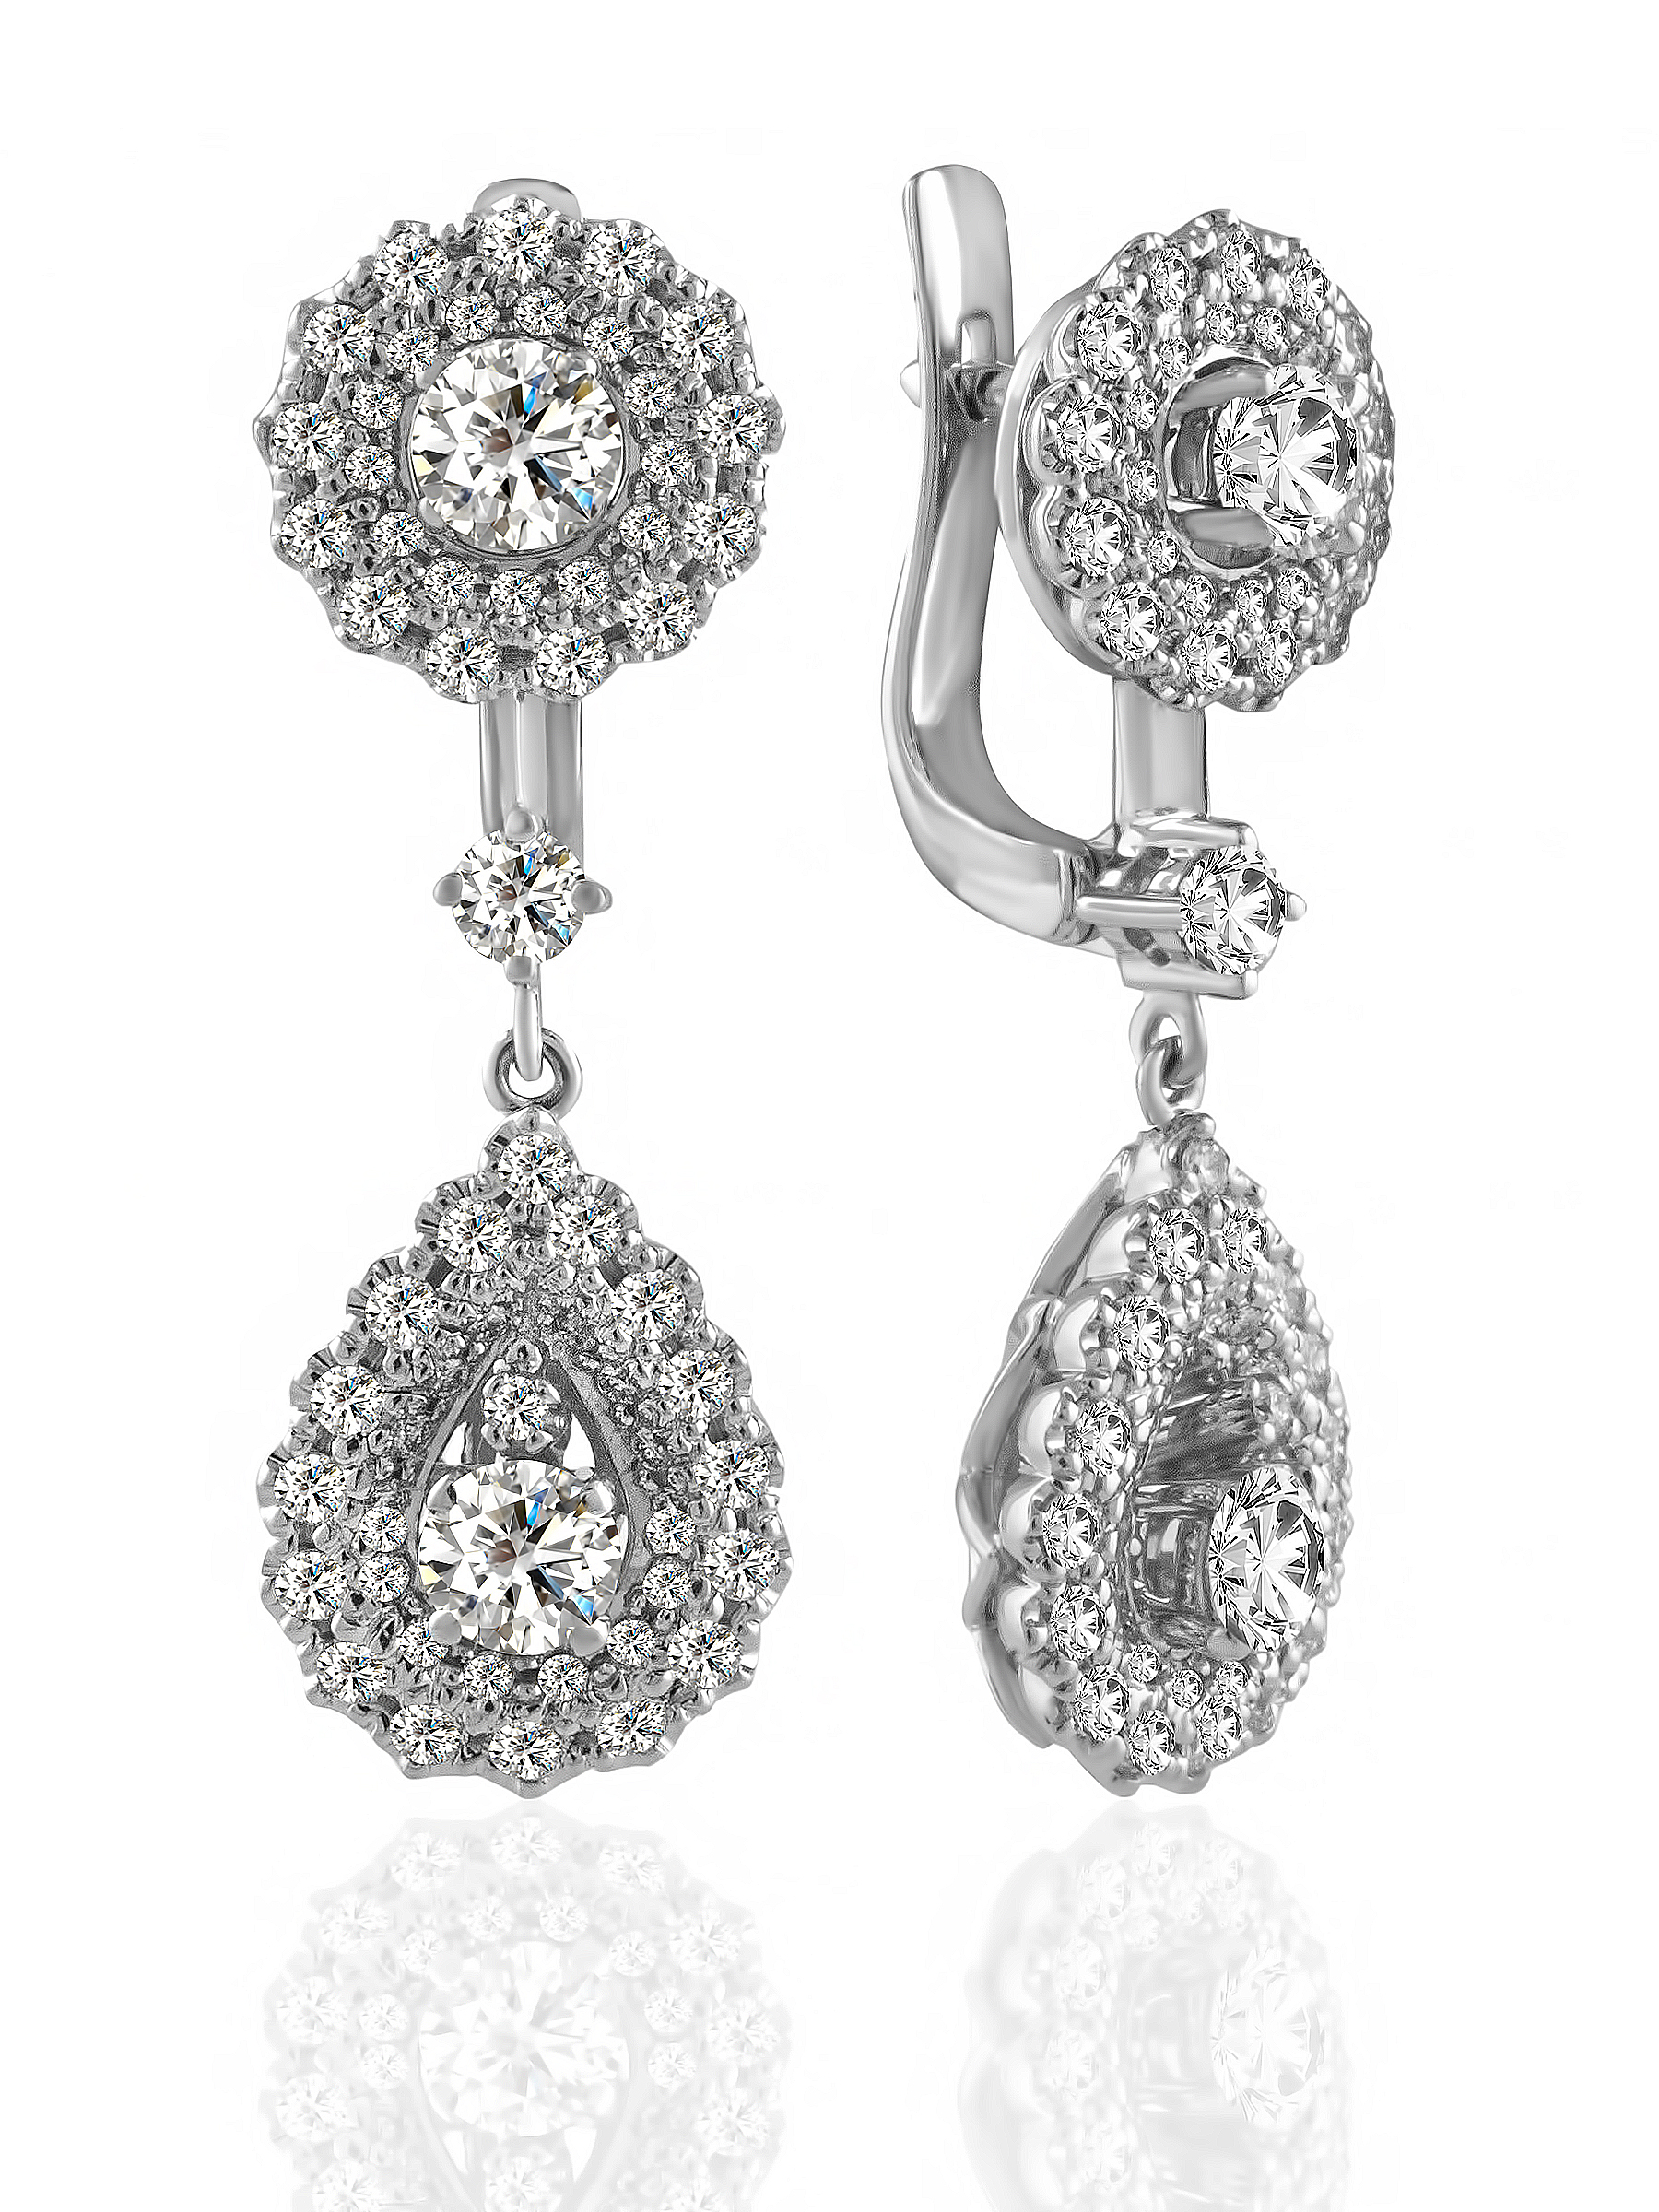 Серьги No name white gold diamond 1.67 ct. earrings